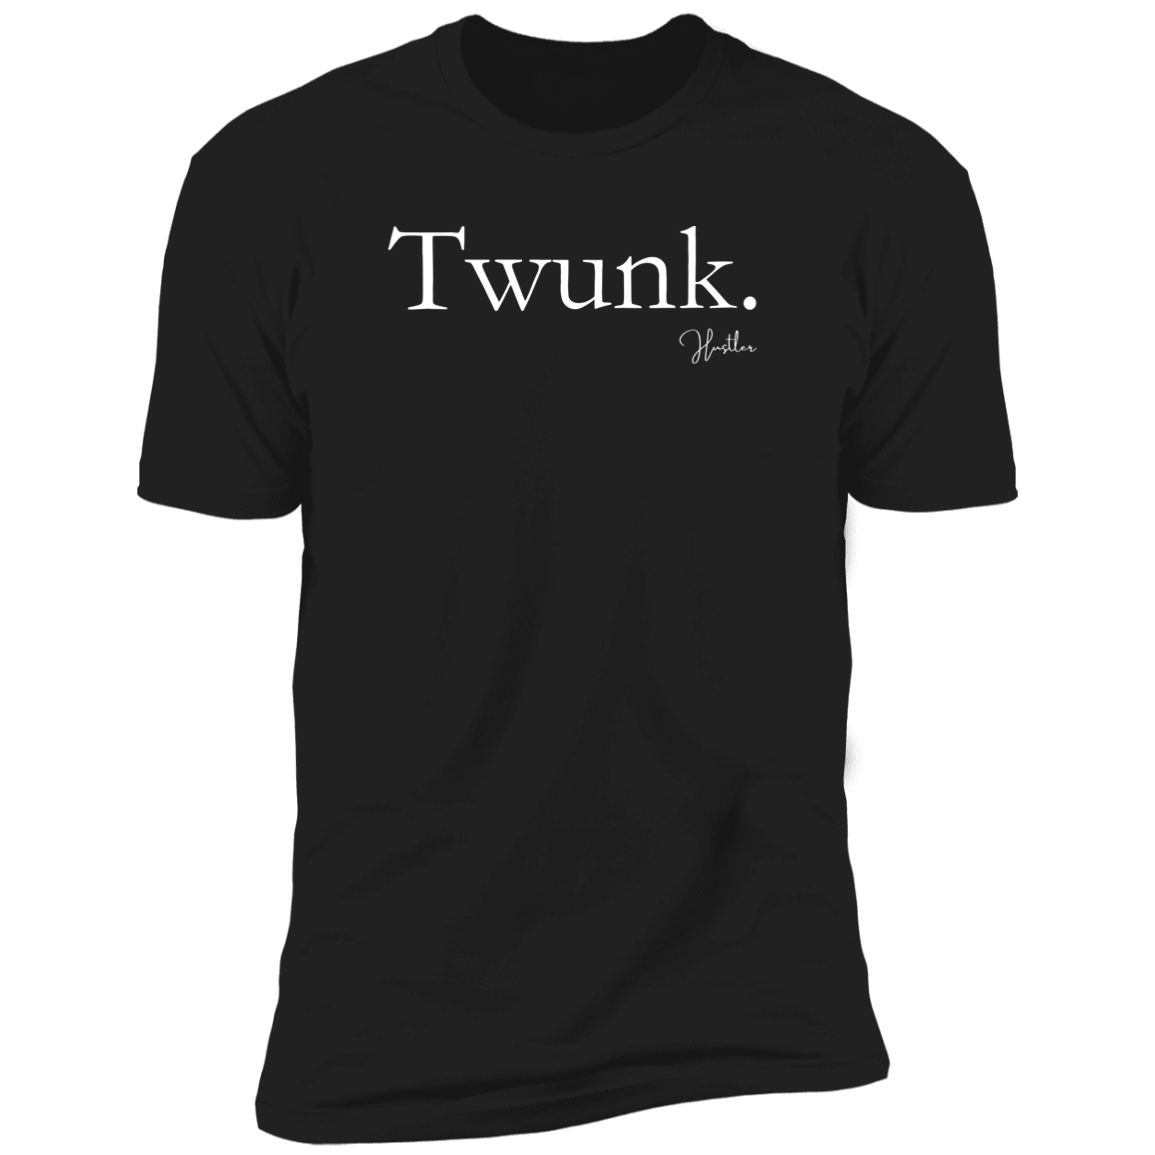 Twunk T-Shirt